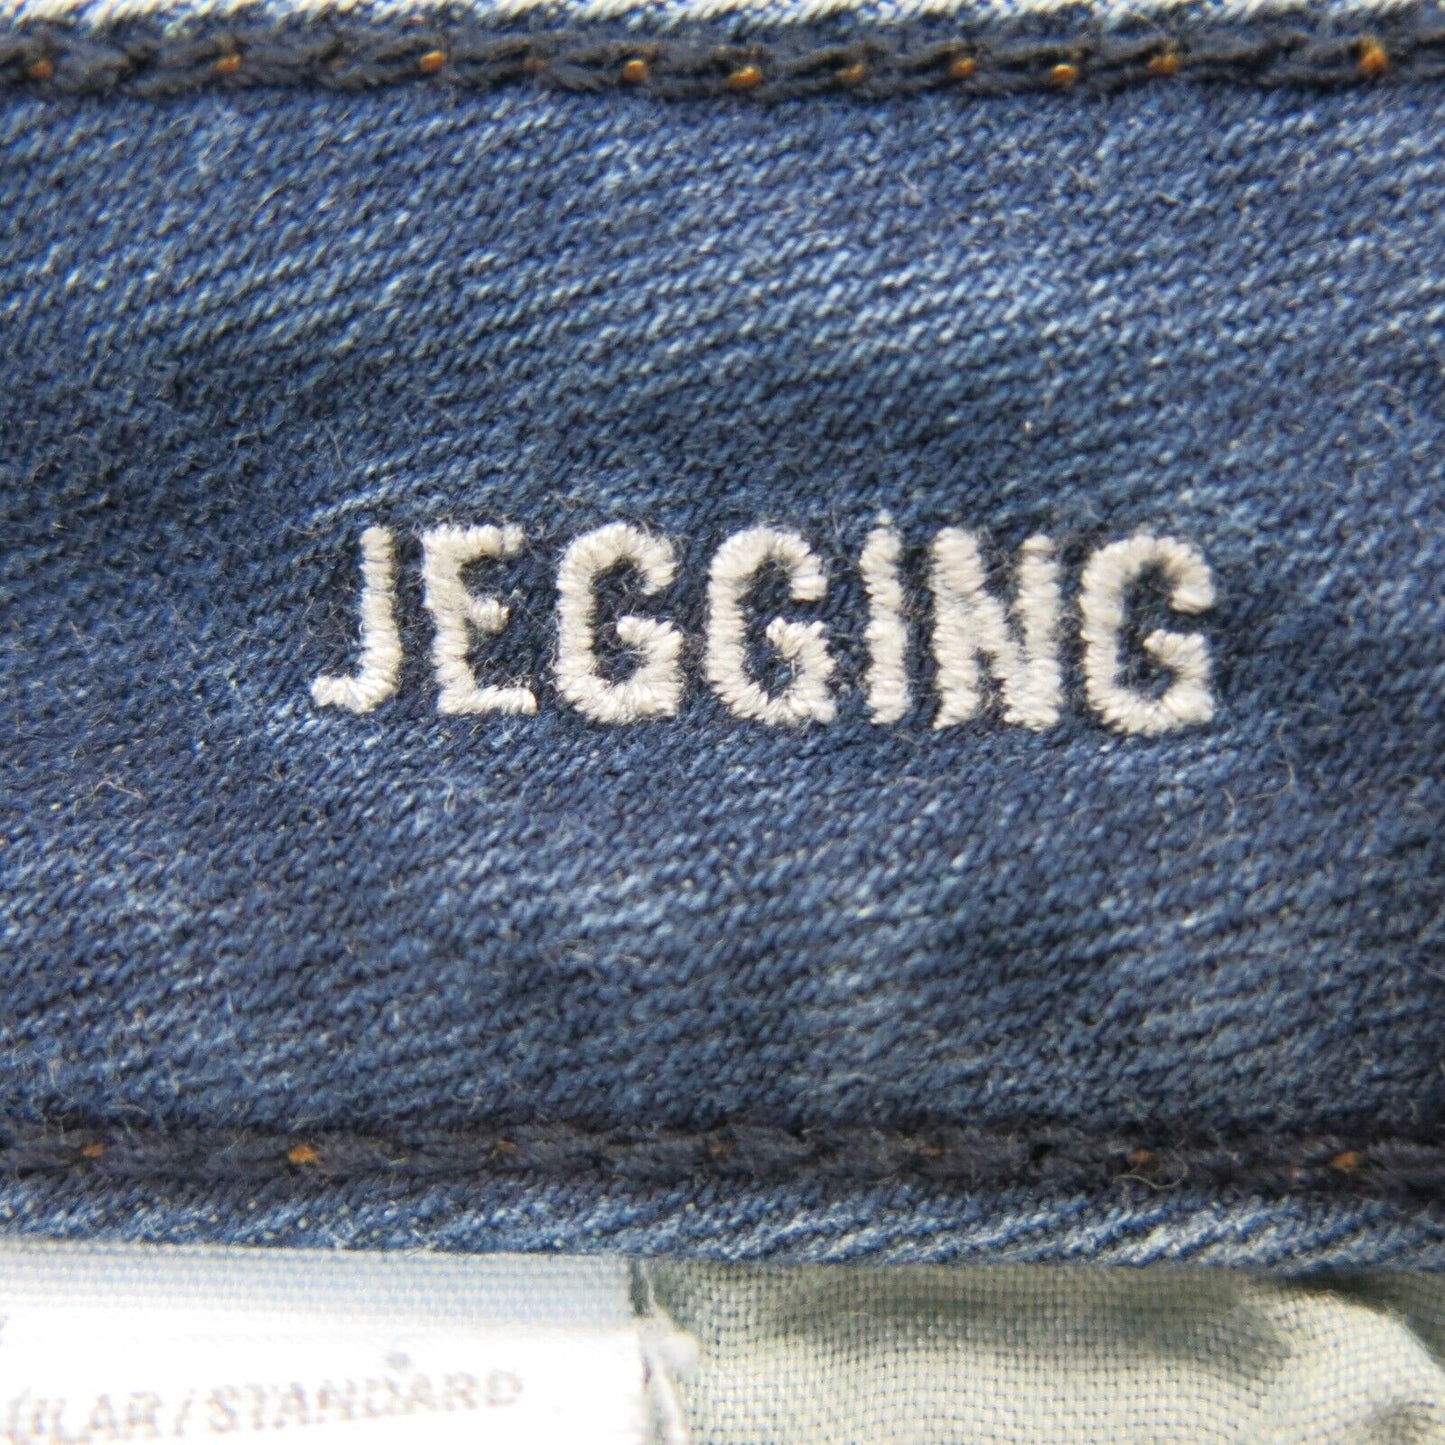 American Eagle Womens Skinny Leg Denim Jegging Jeans Low Rise Blue Size 4